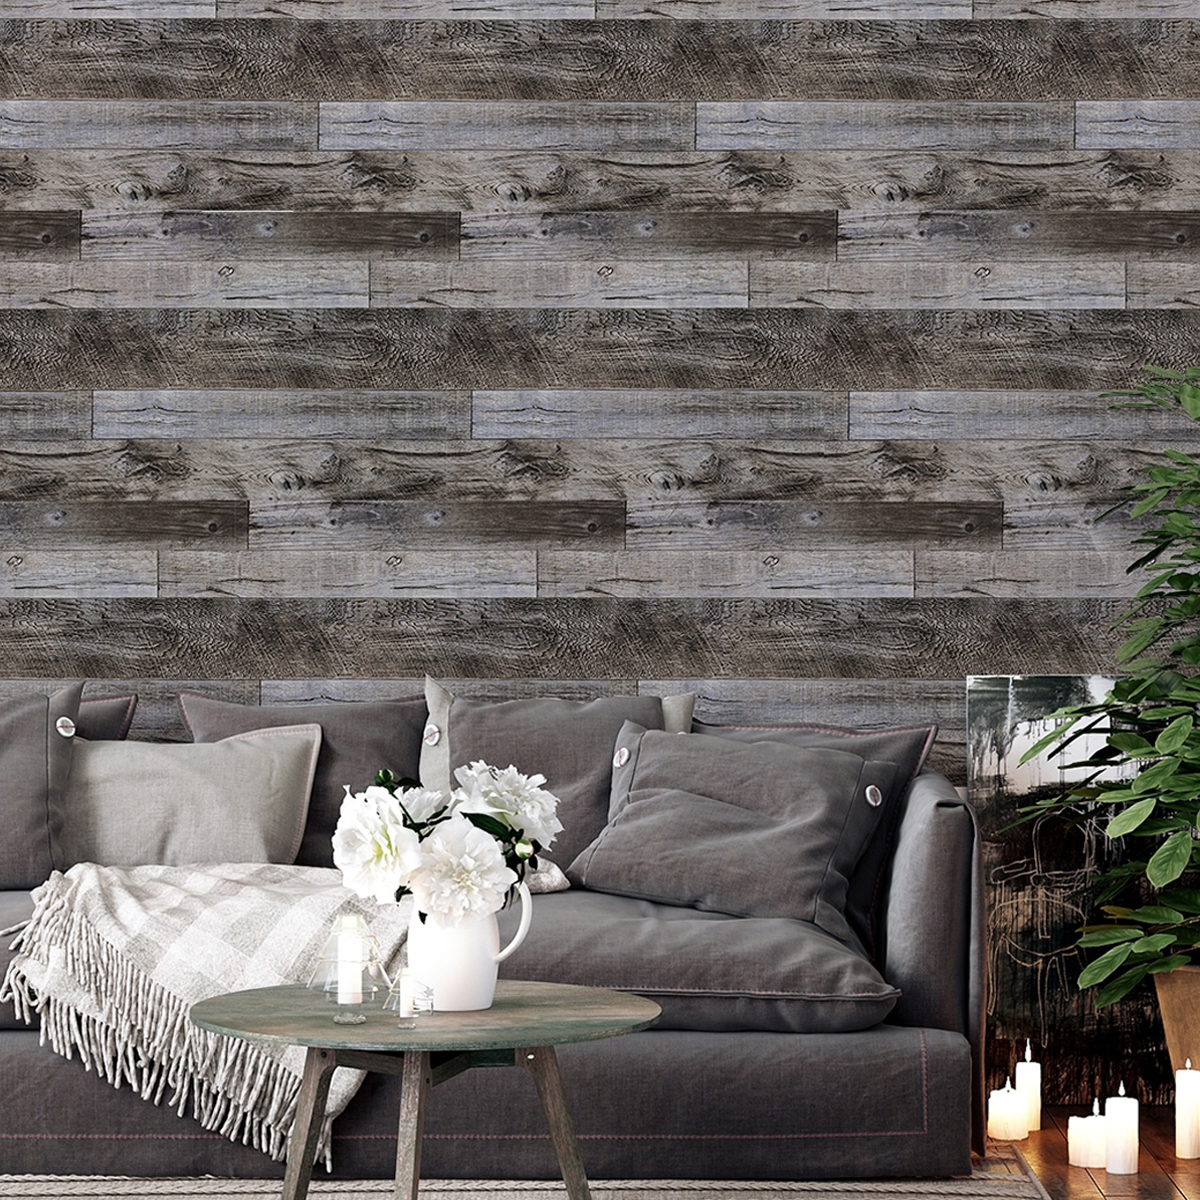 10M-Retro-Brick-Wallpaper-Wall-Sticker-Smooth-Waterproof-PVC-Self-Adhesive-Decoration-1811985-5